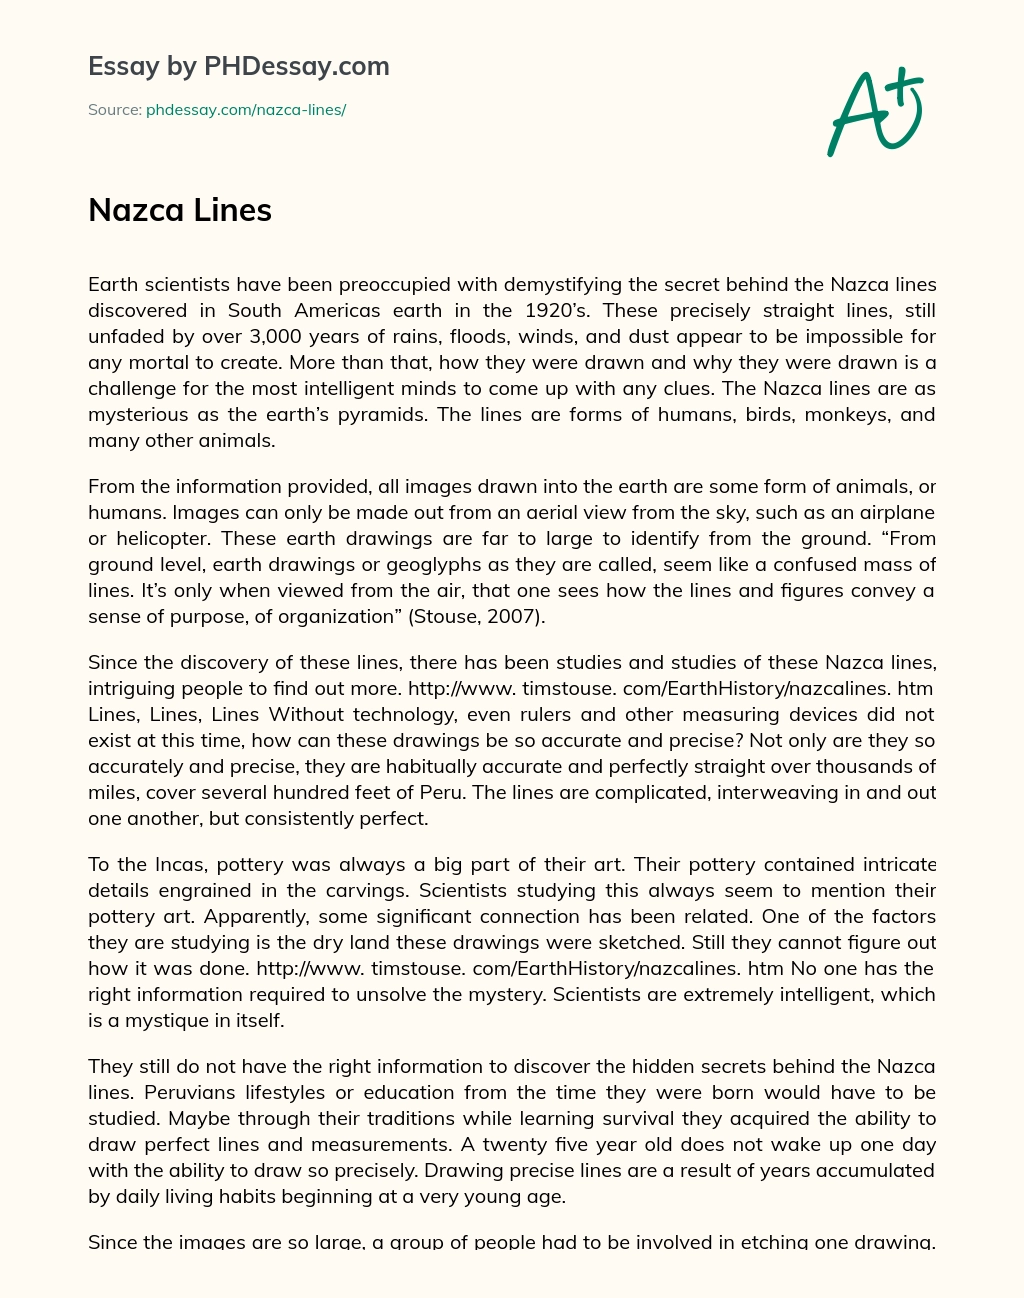 Nazca Lines essay